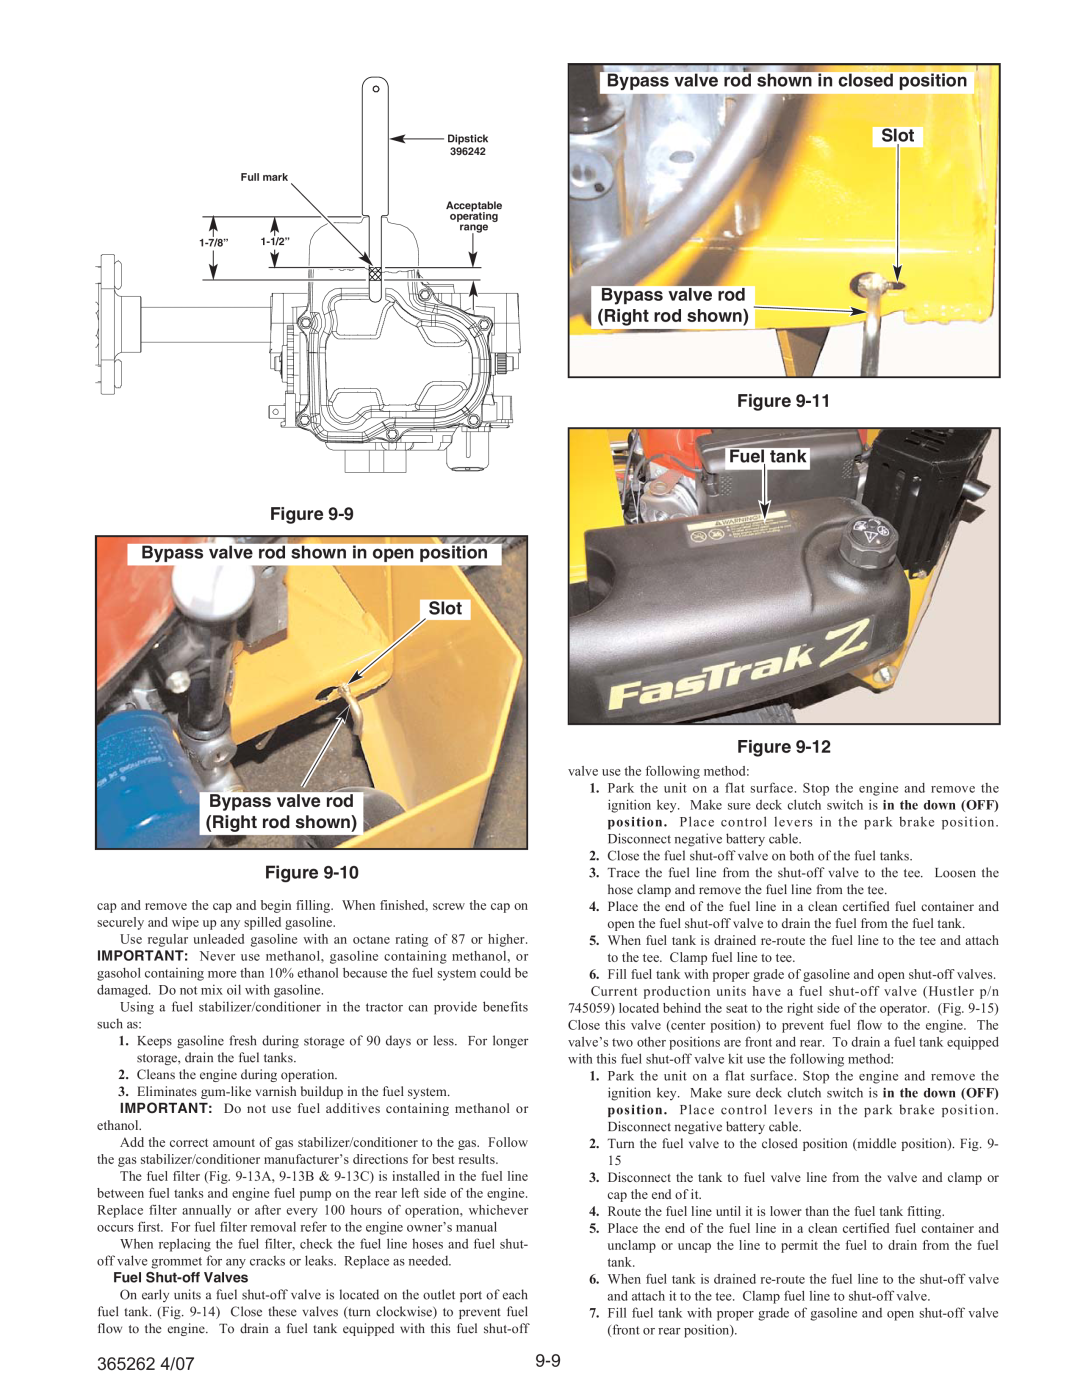 Hustler Turf Lawn Mower manual Bypass valve rod shown in open position Slot, Bypass valve rod Right rod shown, Fuel tank 